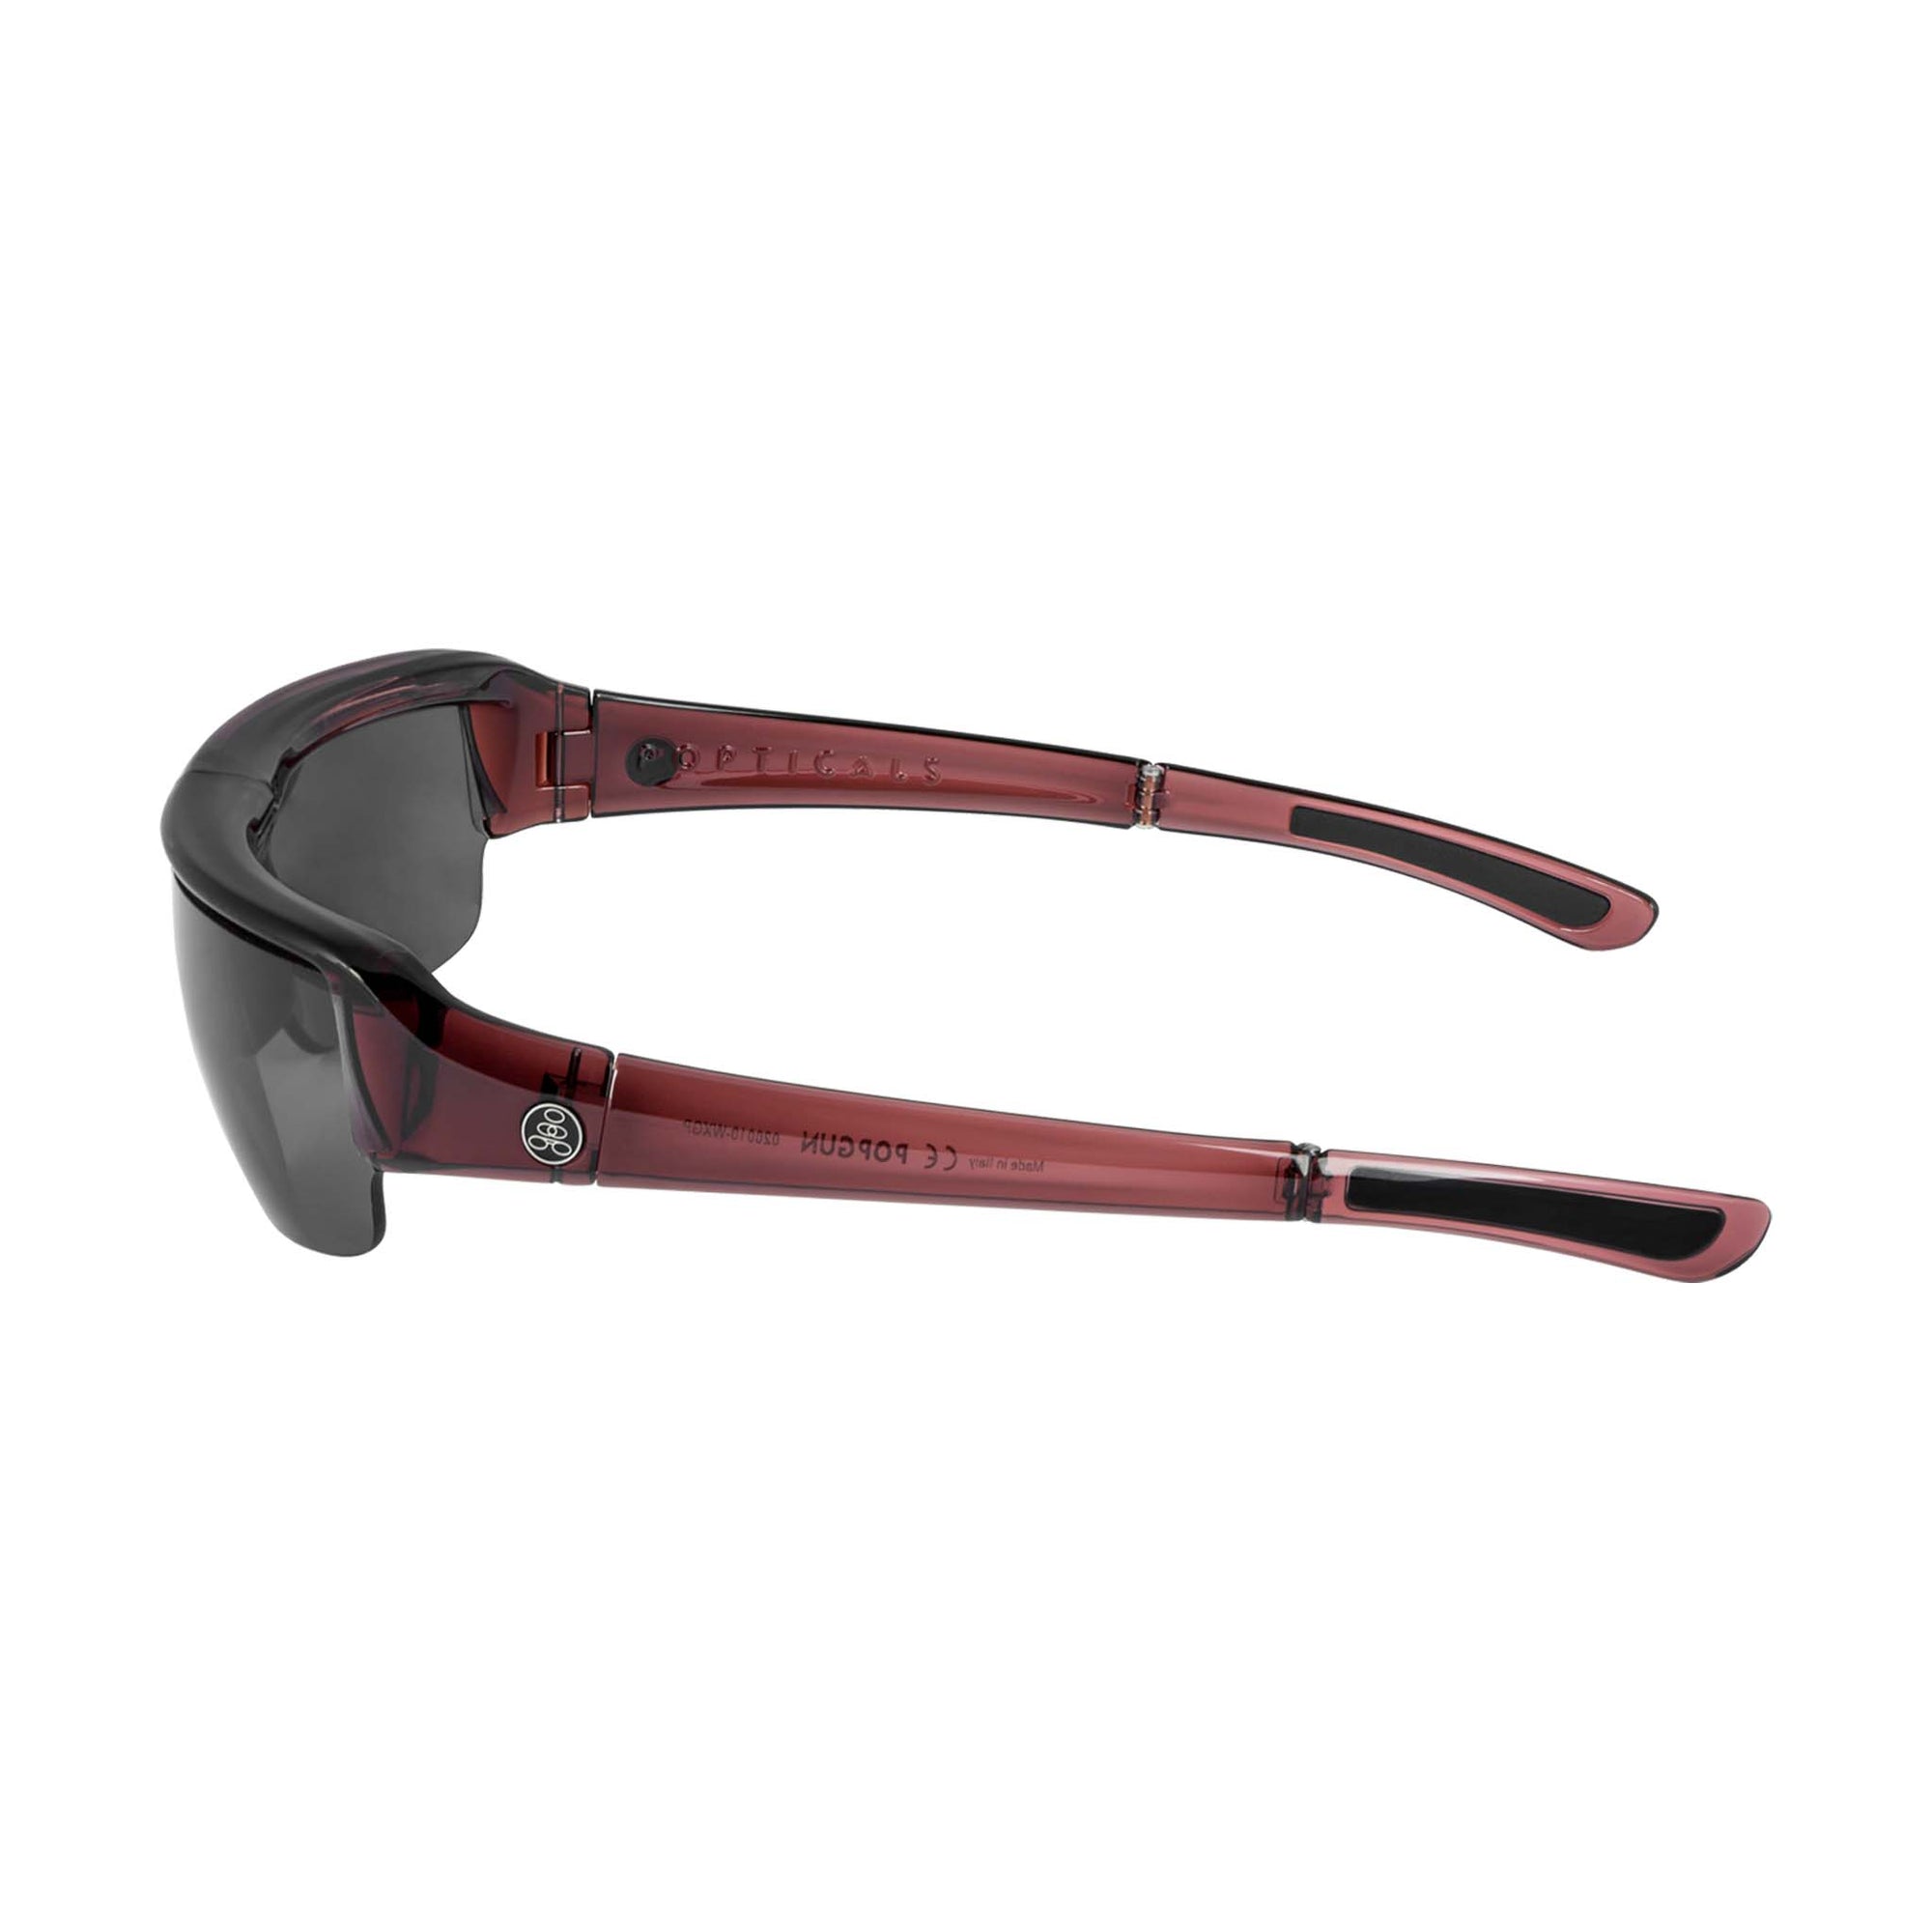 Popticals, Premium Compact Sunglasses, PopGun, 020010-WXGP, Polarized Sunglasses, Gloss Wine Crystal Frame, Gray Lenses, Side View